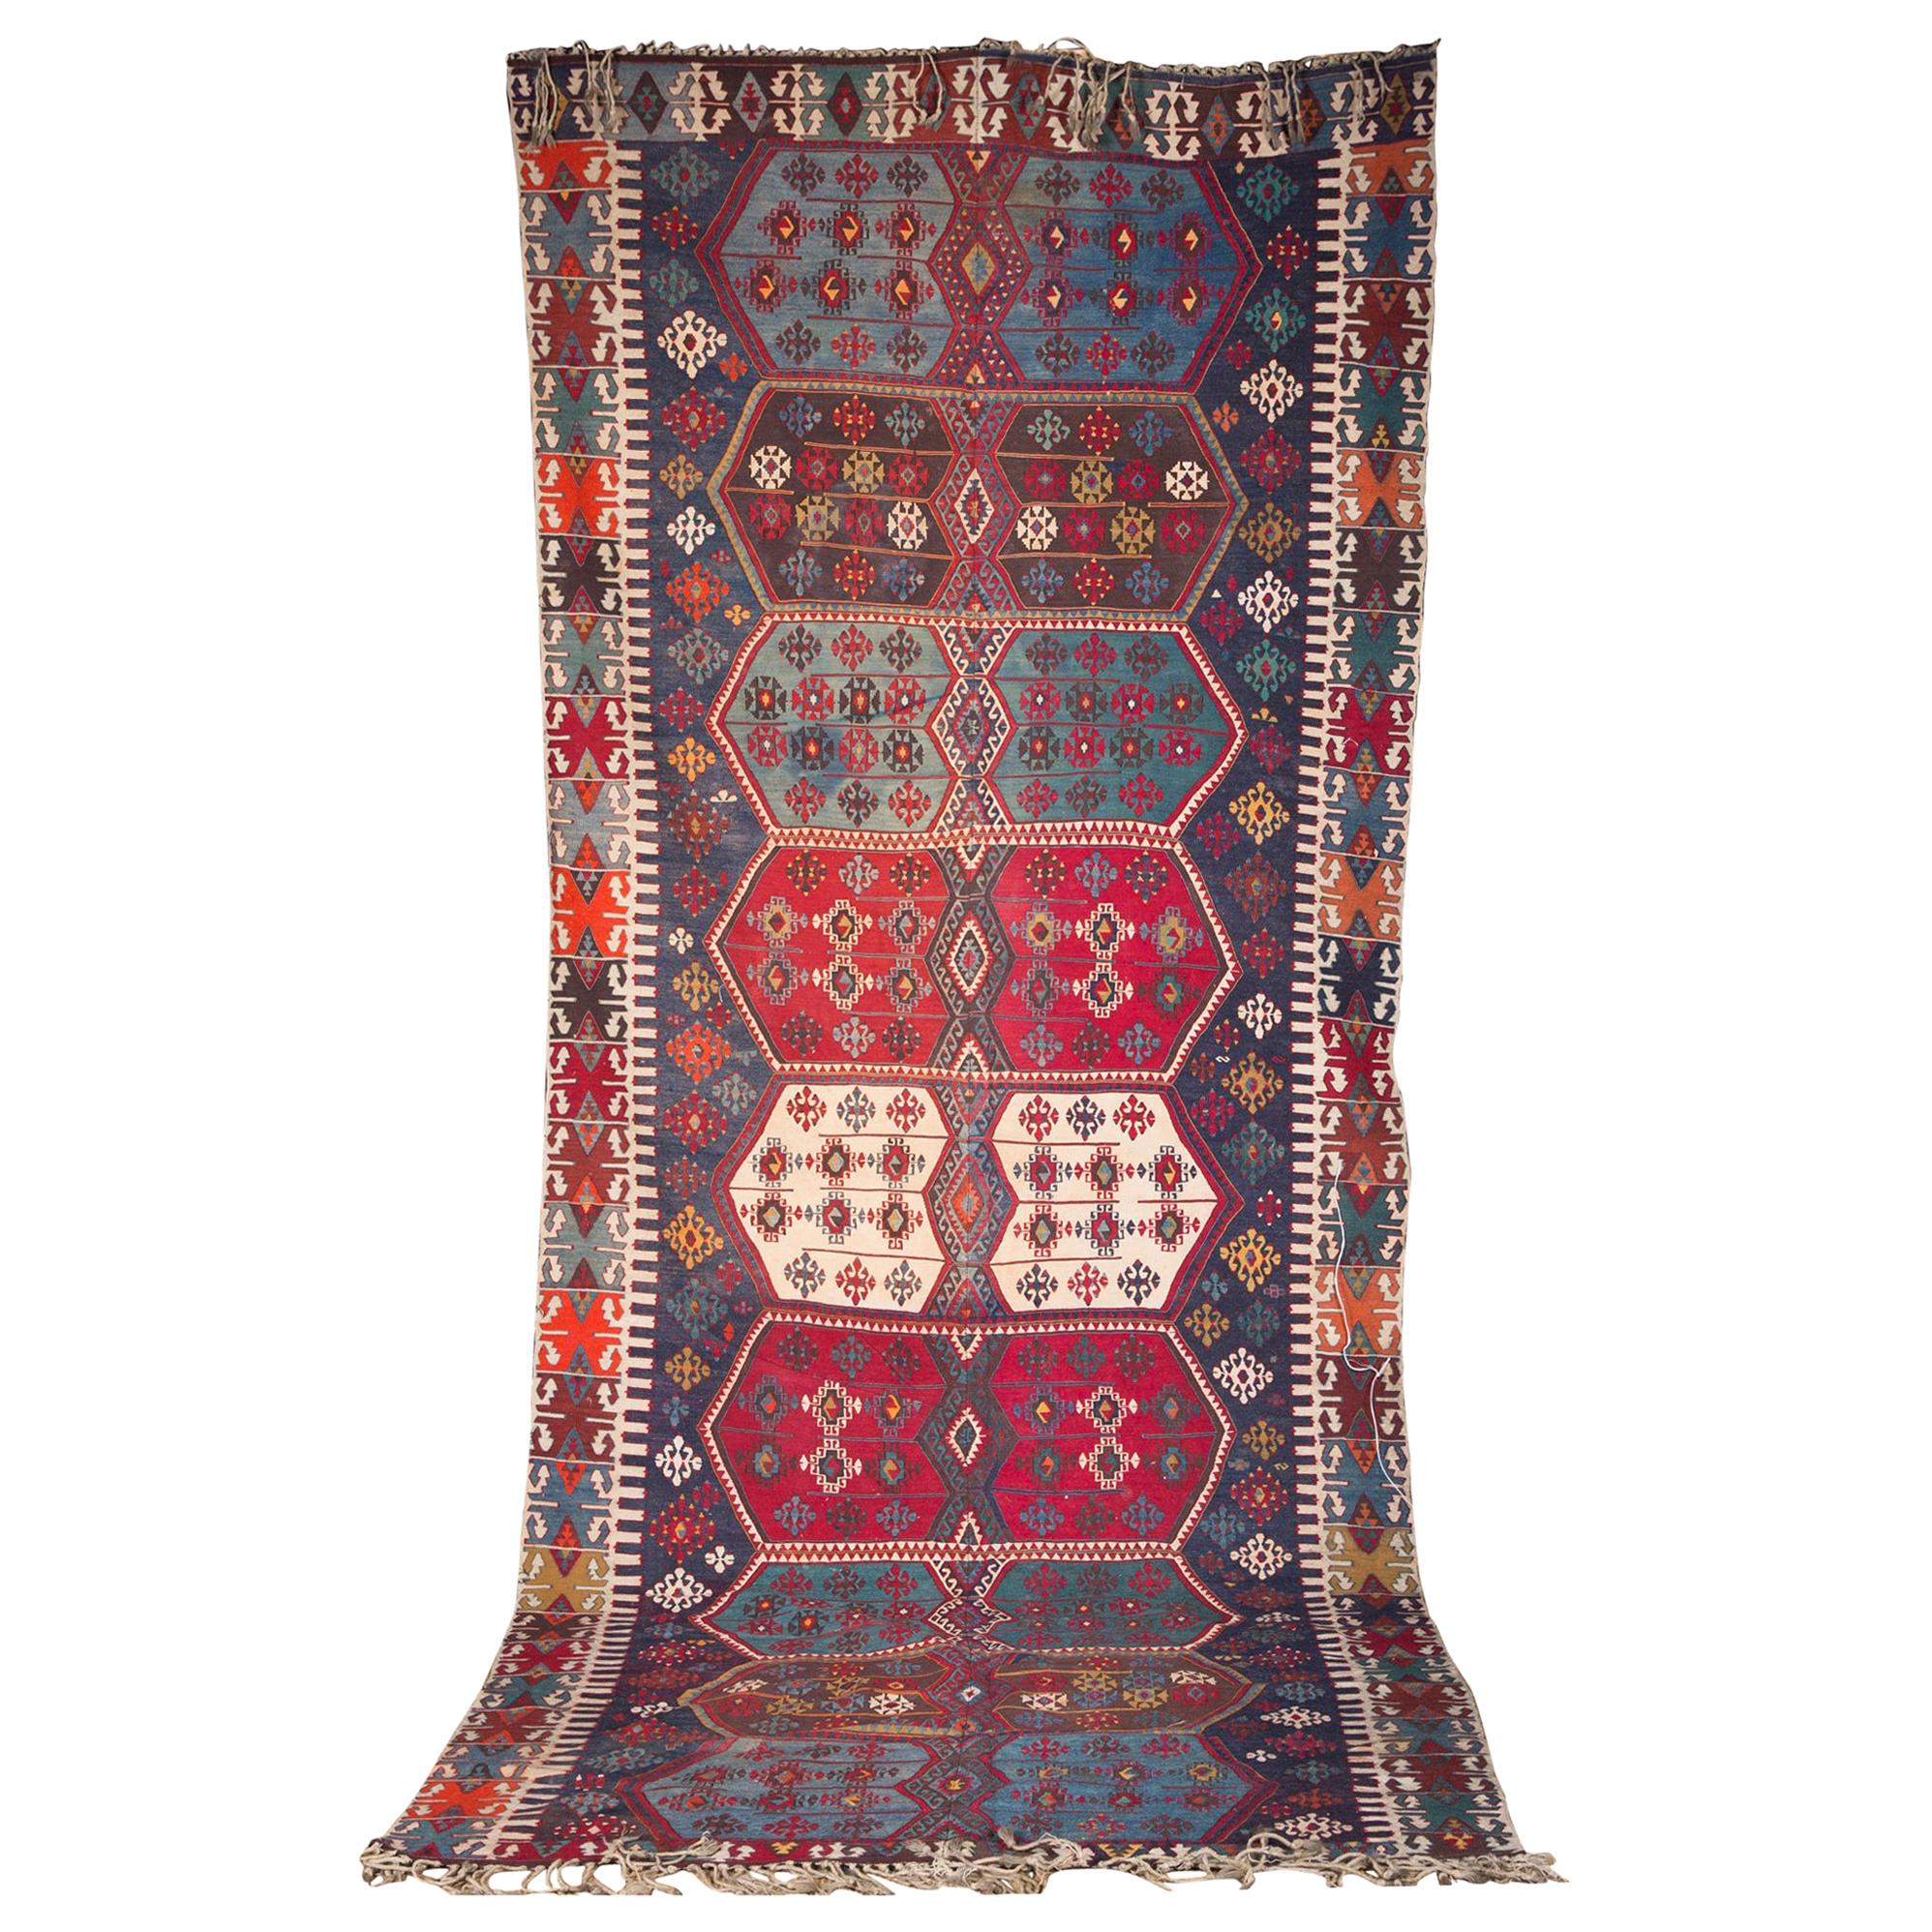 Large Antique Gallery Carpet Turkish Kilim, circa 1900